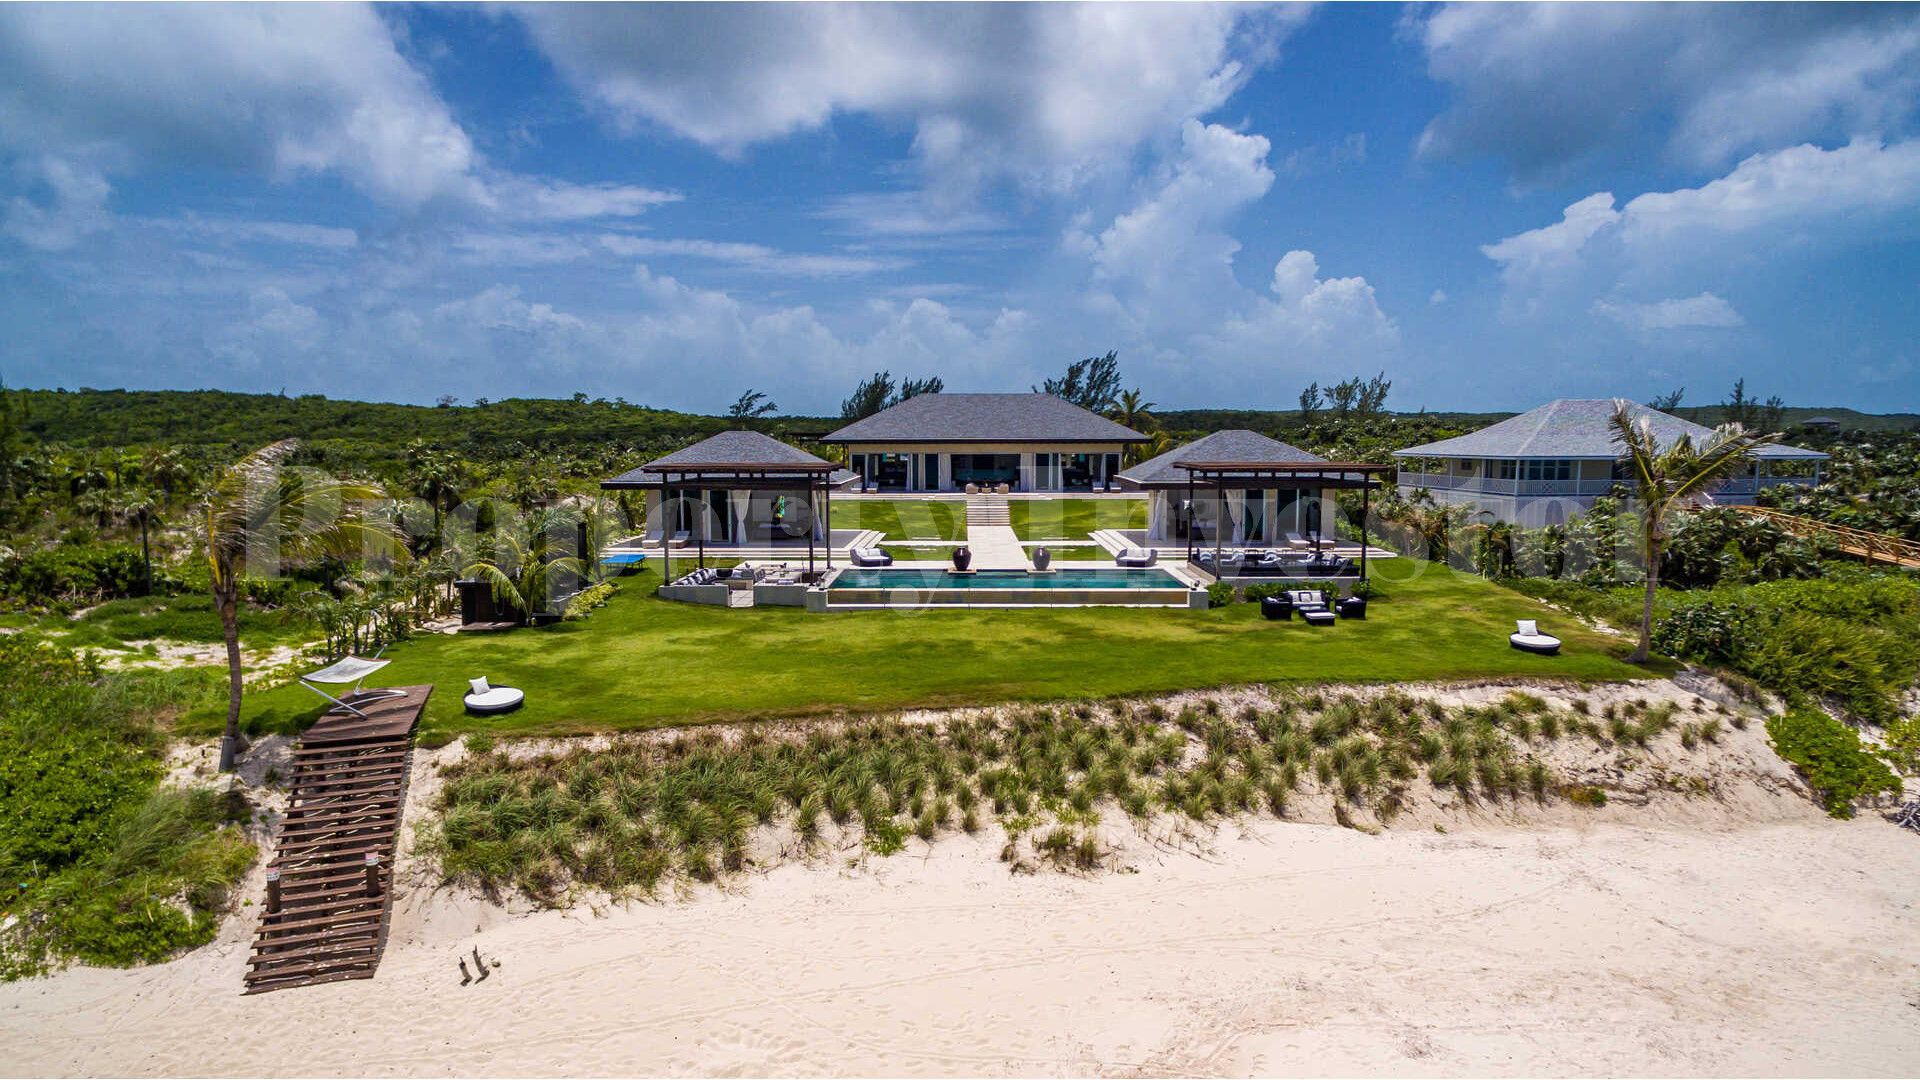 Divine 4 Bedroom Luxury Beachfront Villa for Sale in Eleuthera, the Bahamas